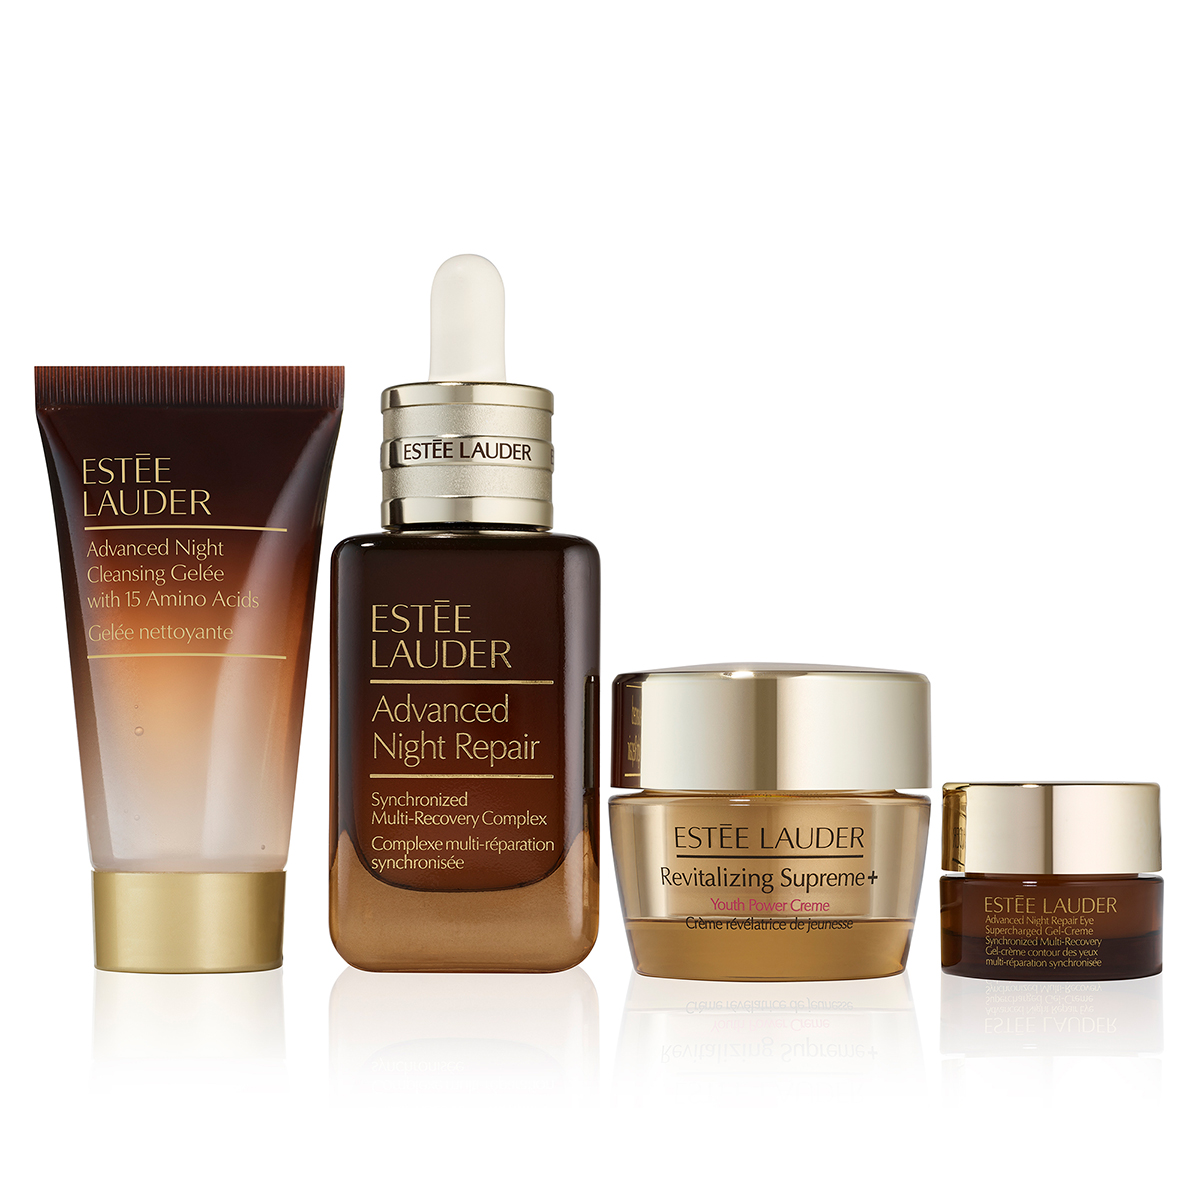 Estee Lauder(tm) Nightly Renewal Skincare Set